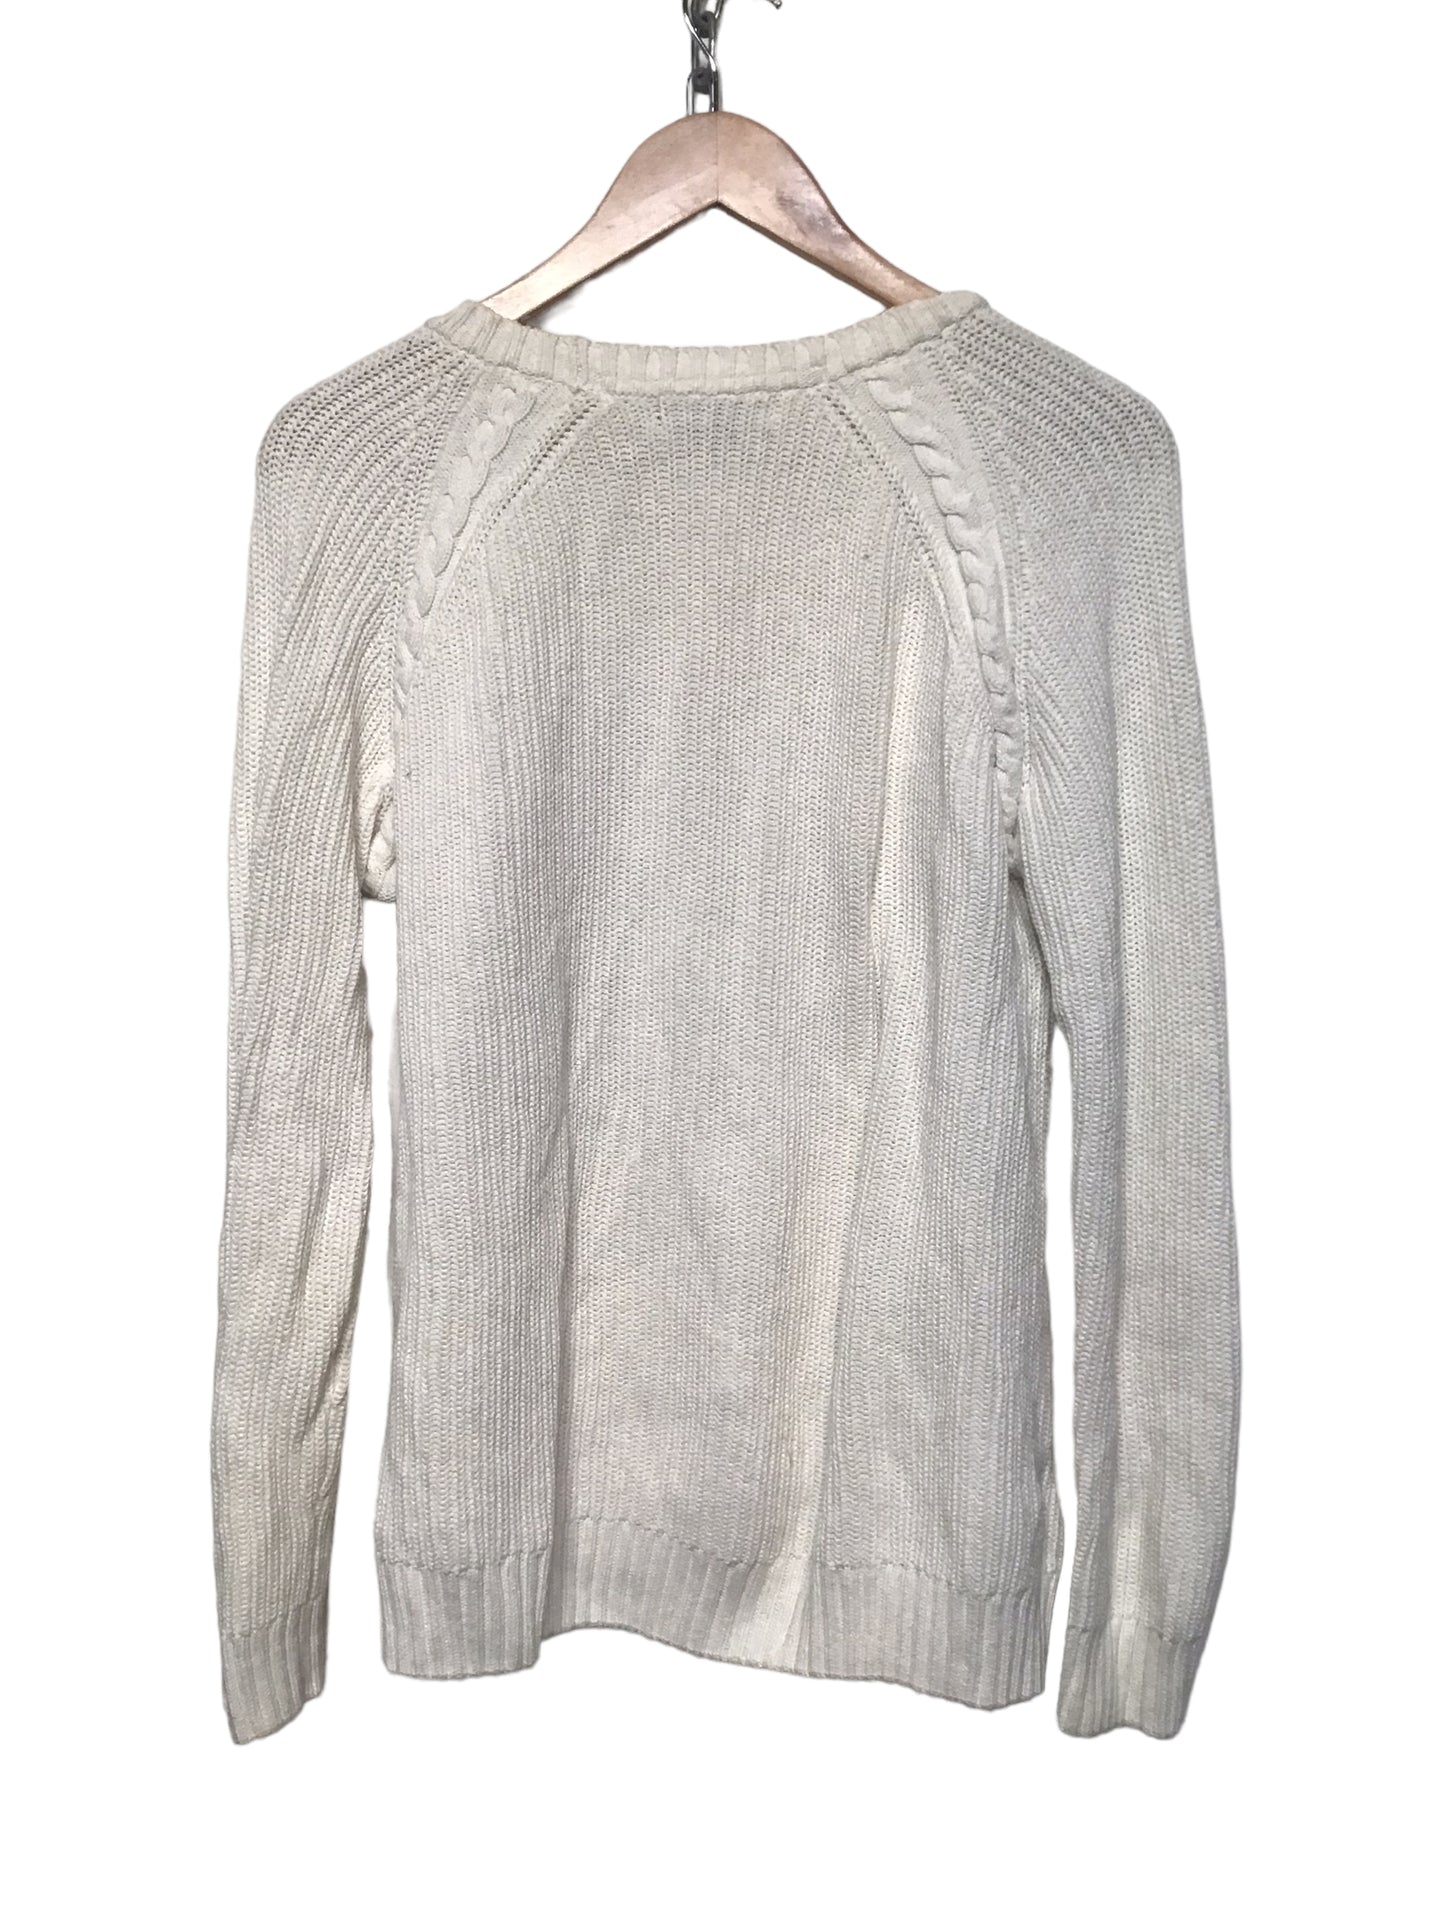 E-Basics Knitted Sweatshirt (Size M)